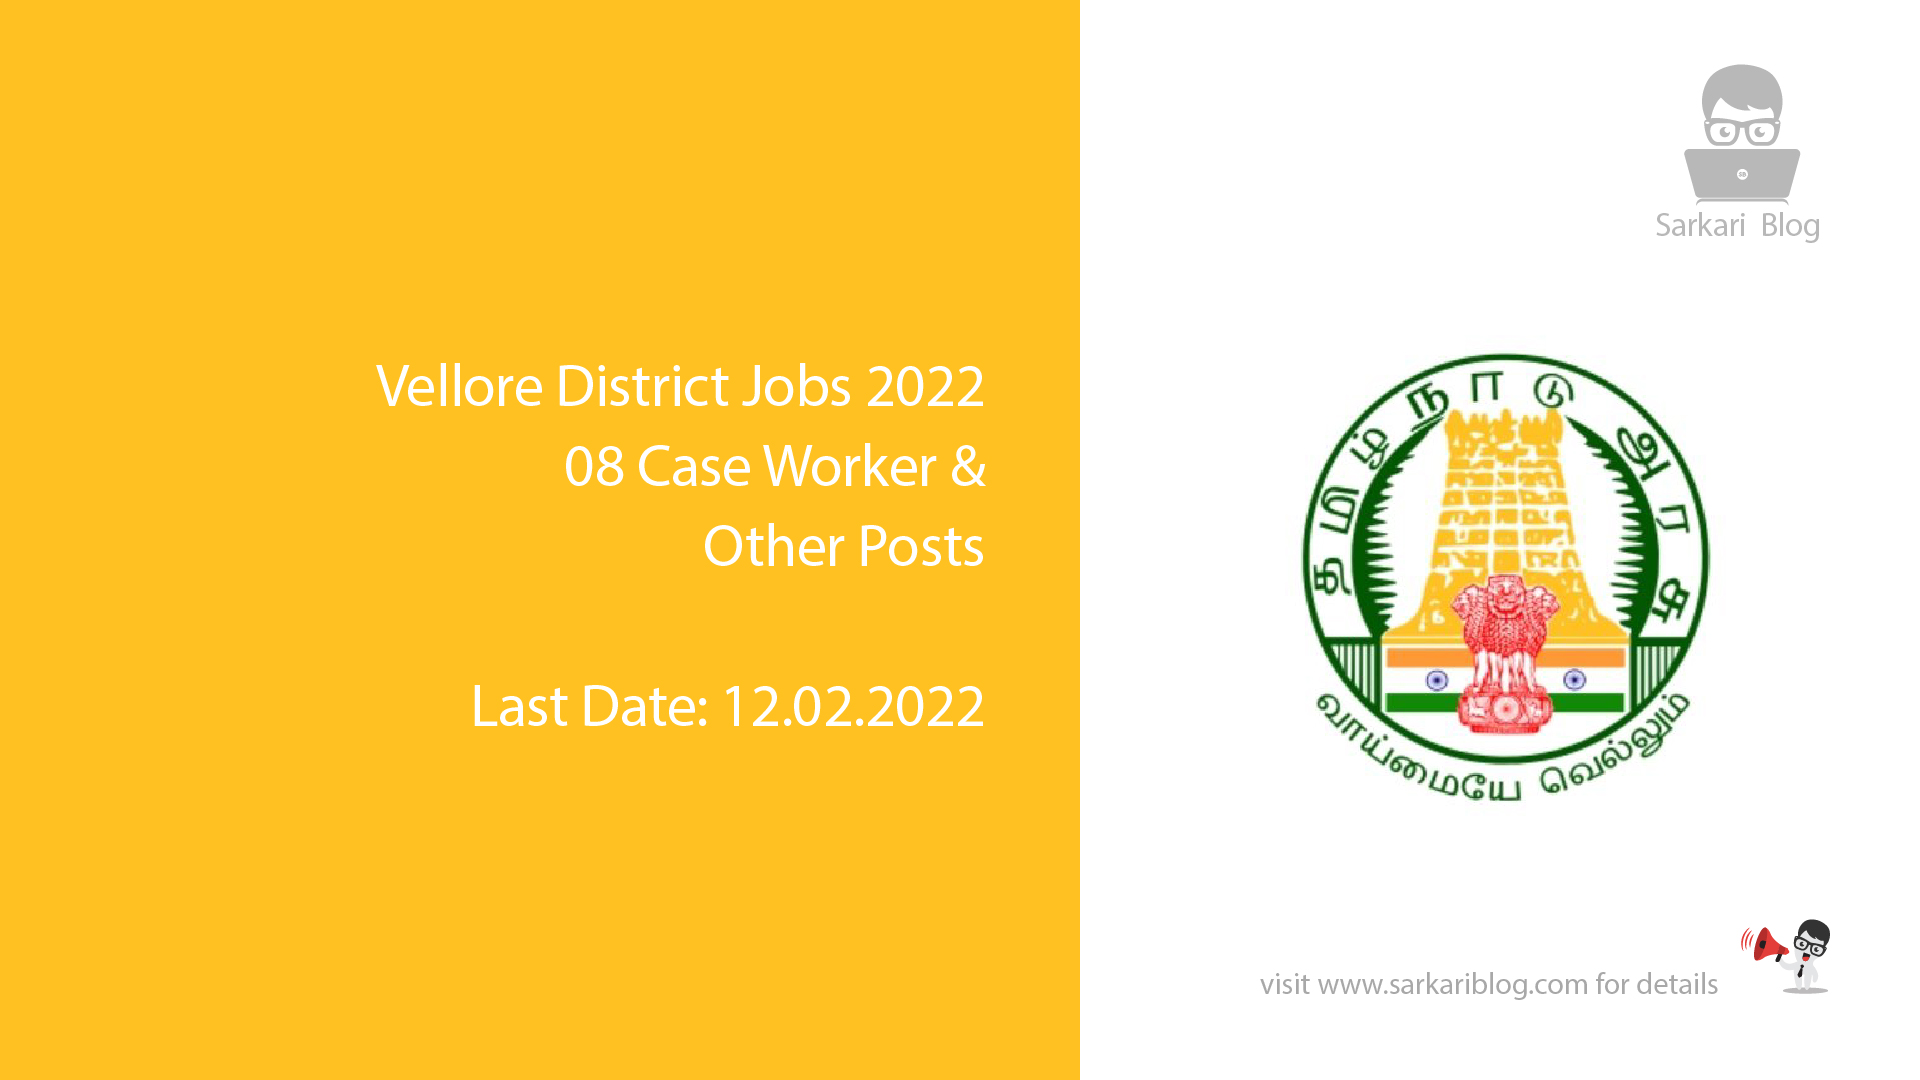 Vellore District Jobs 2022